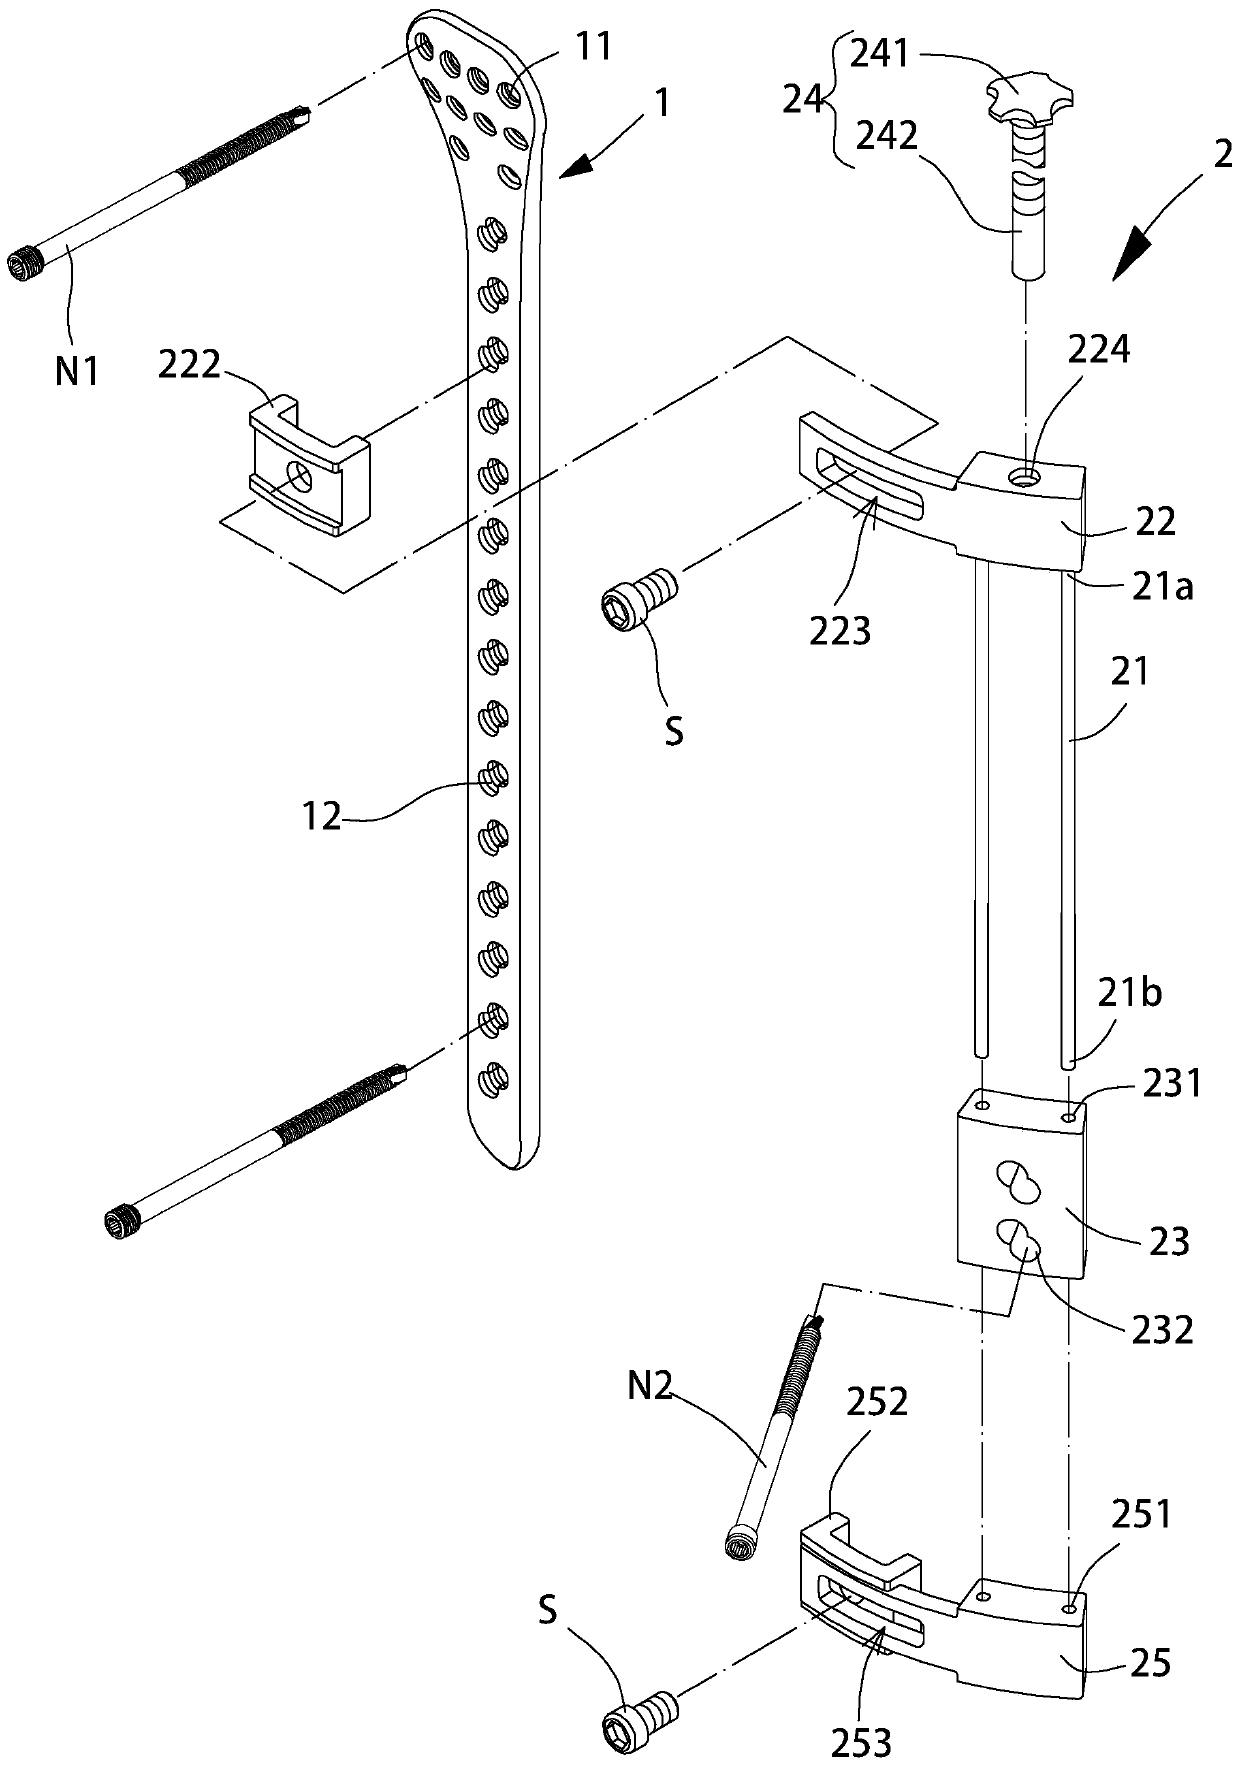 External fixator and its adjustment components